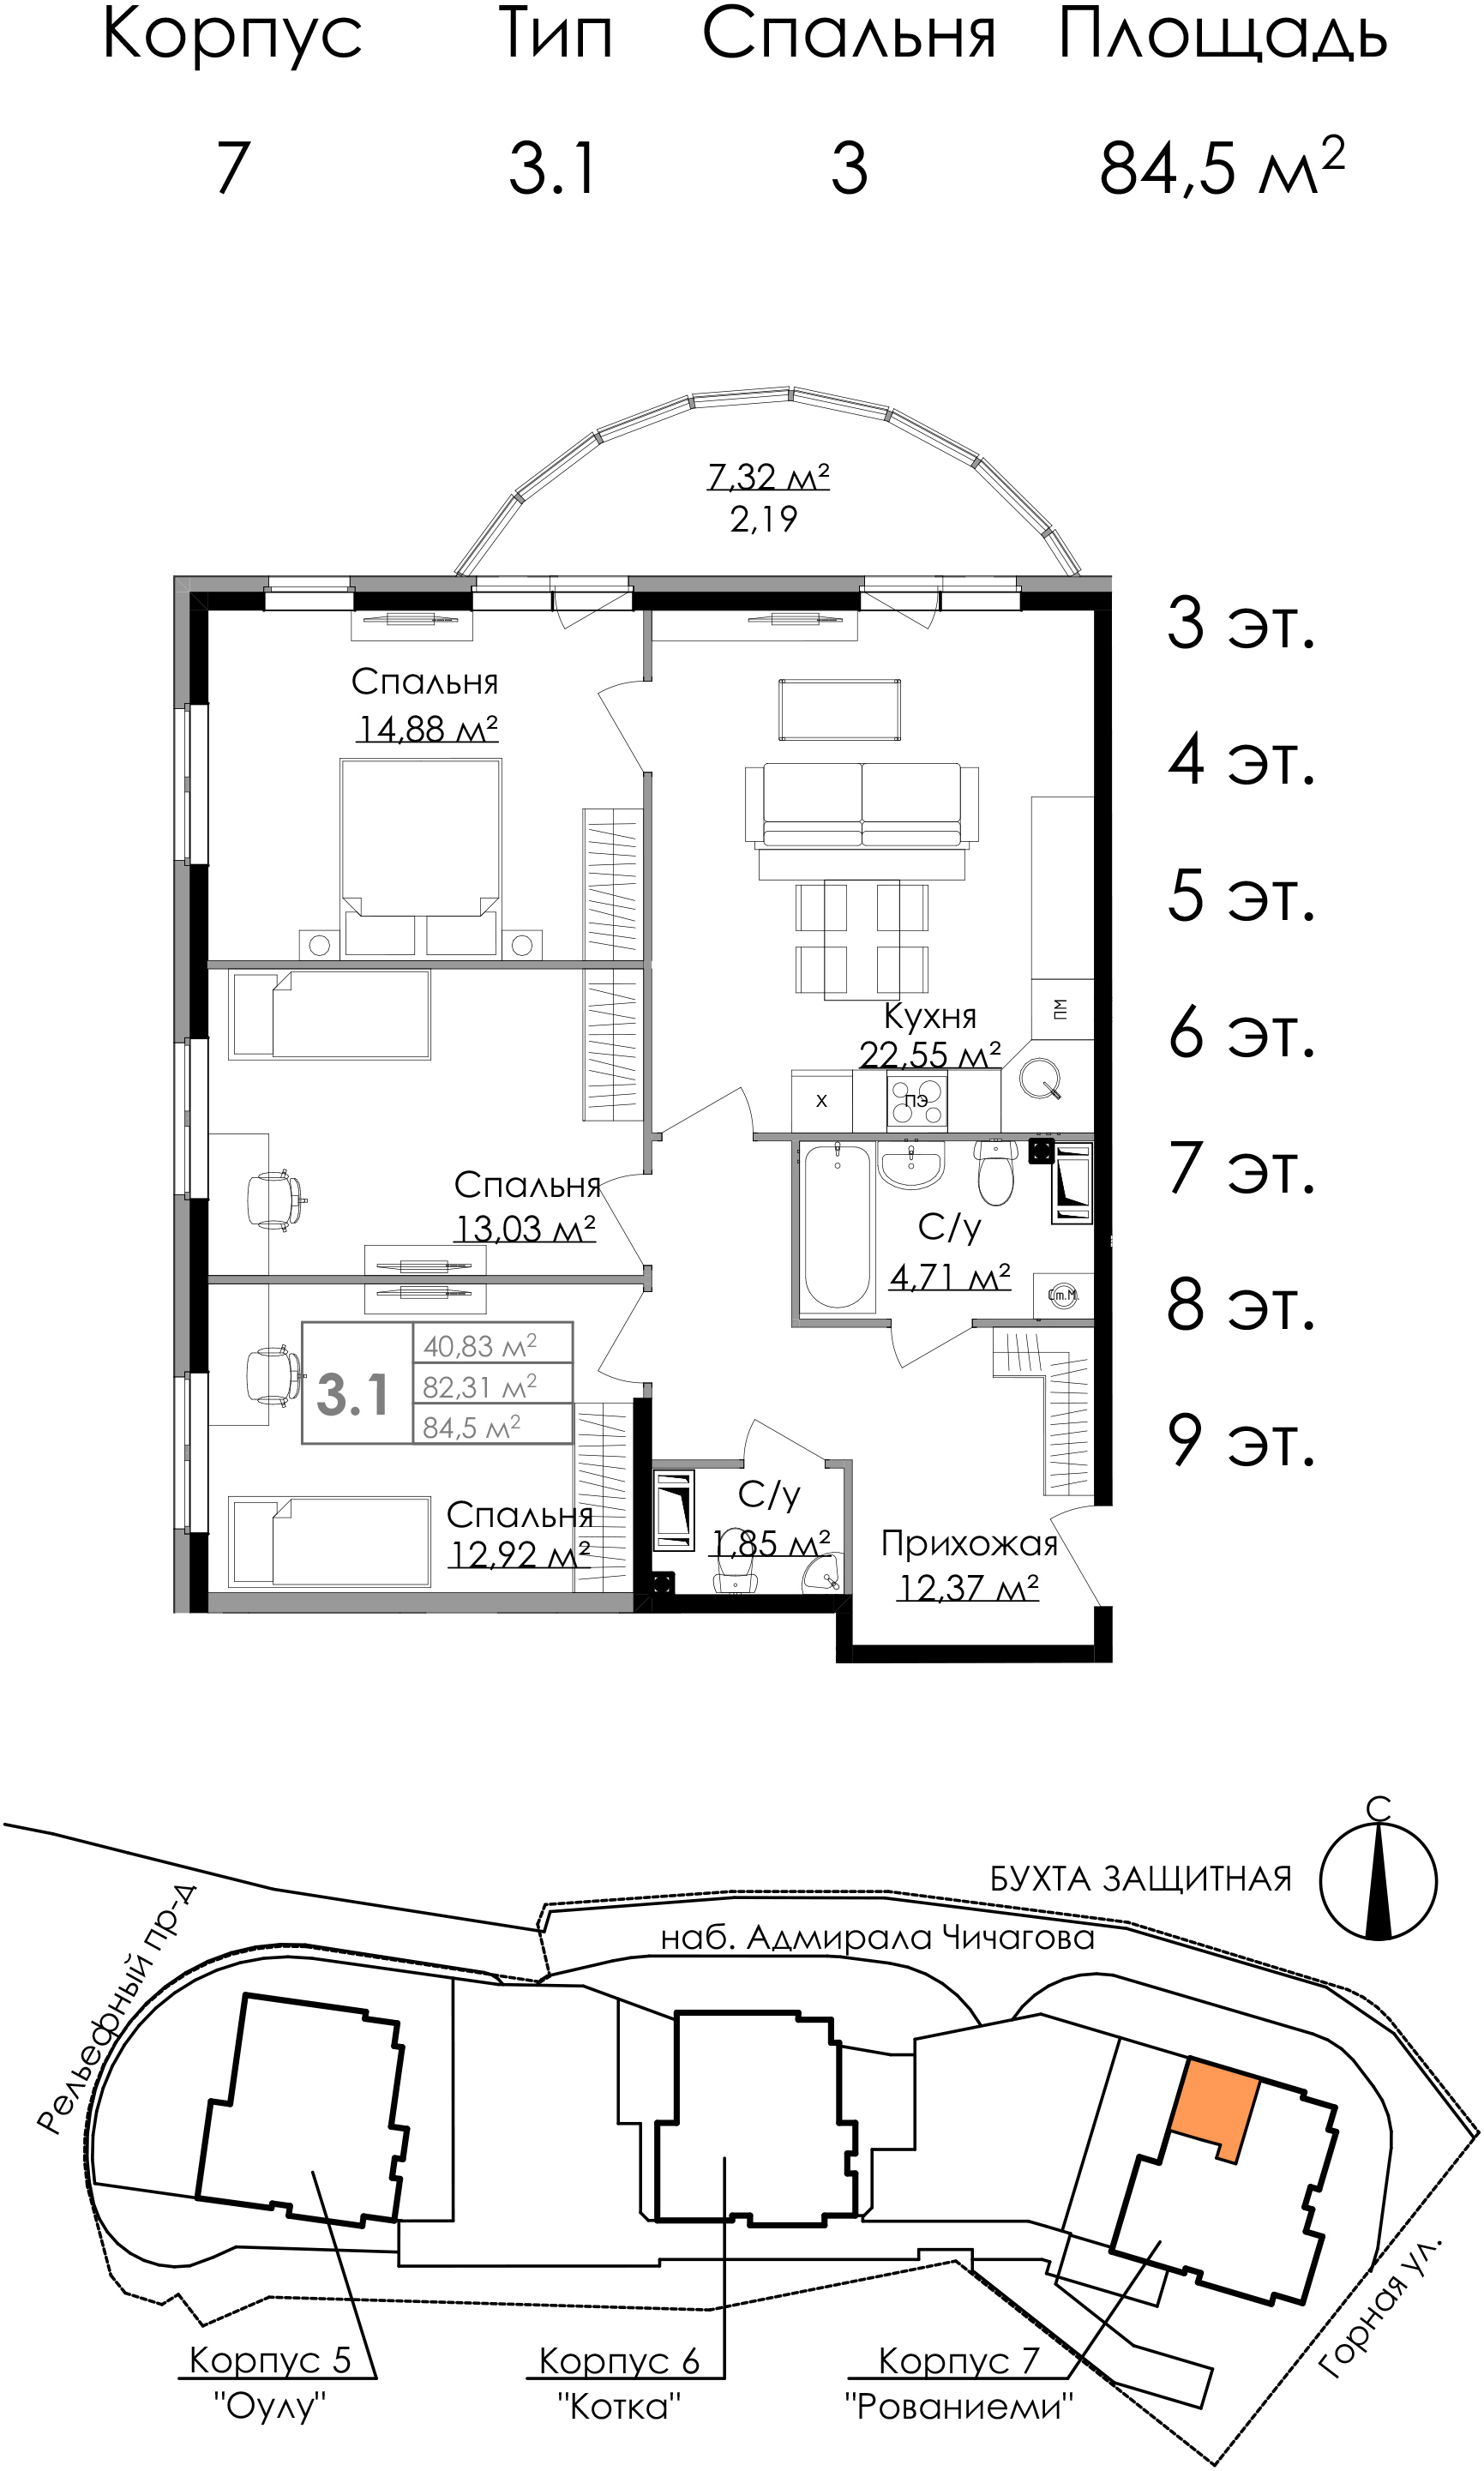 3 комн. квартира, 84.5 м², 7 этаж 